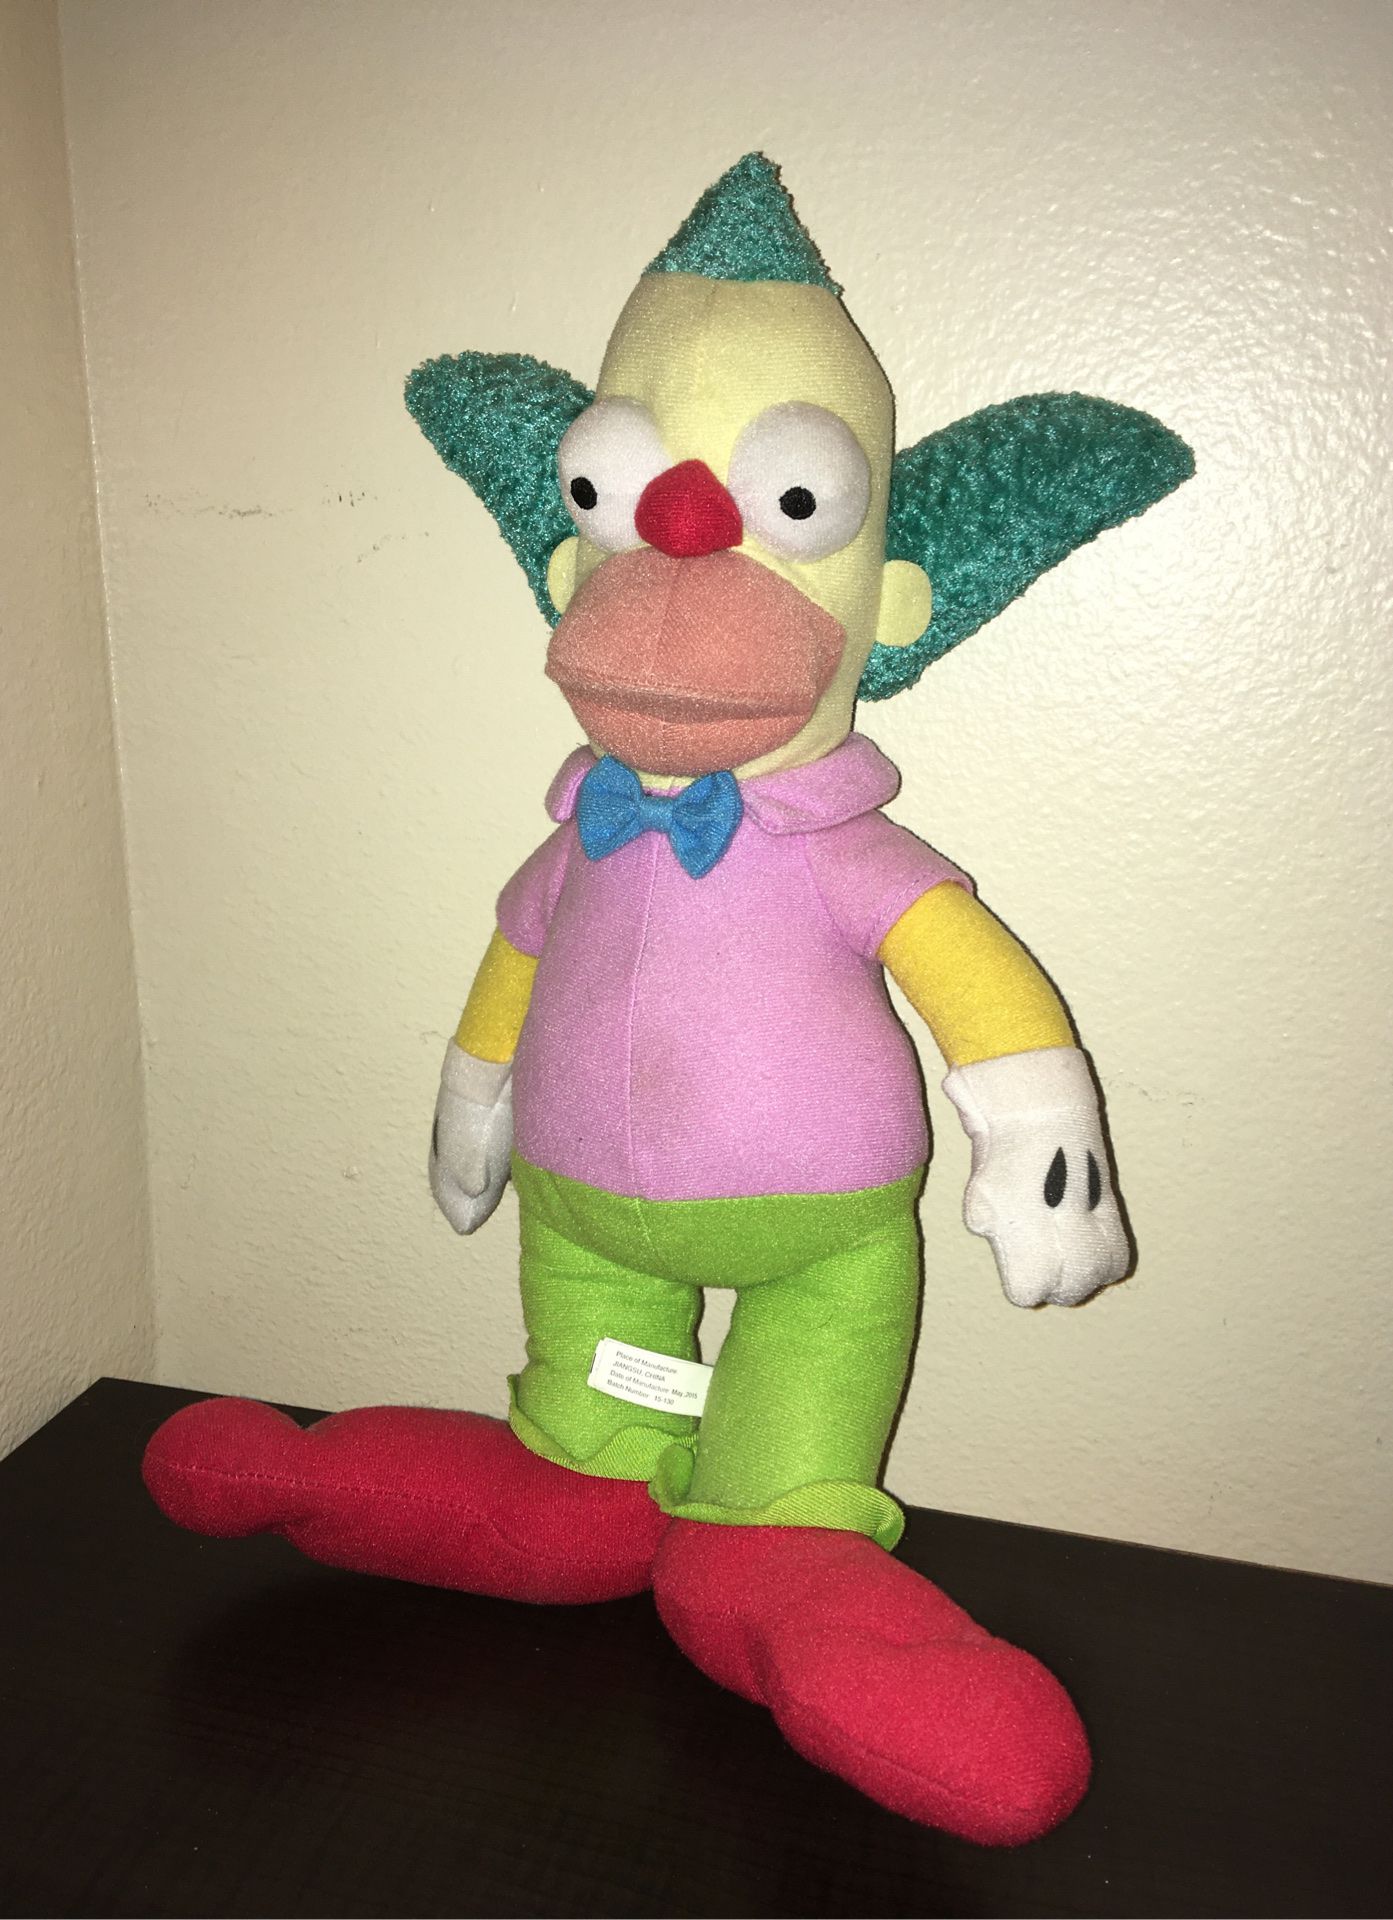 krusty the clown plush toy